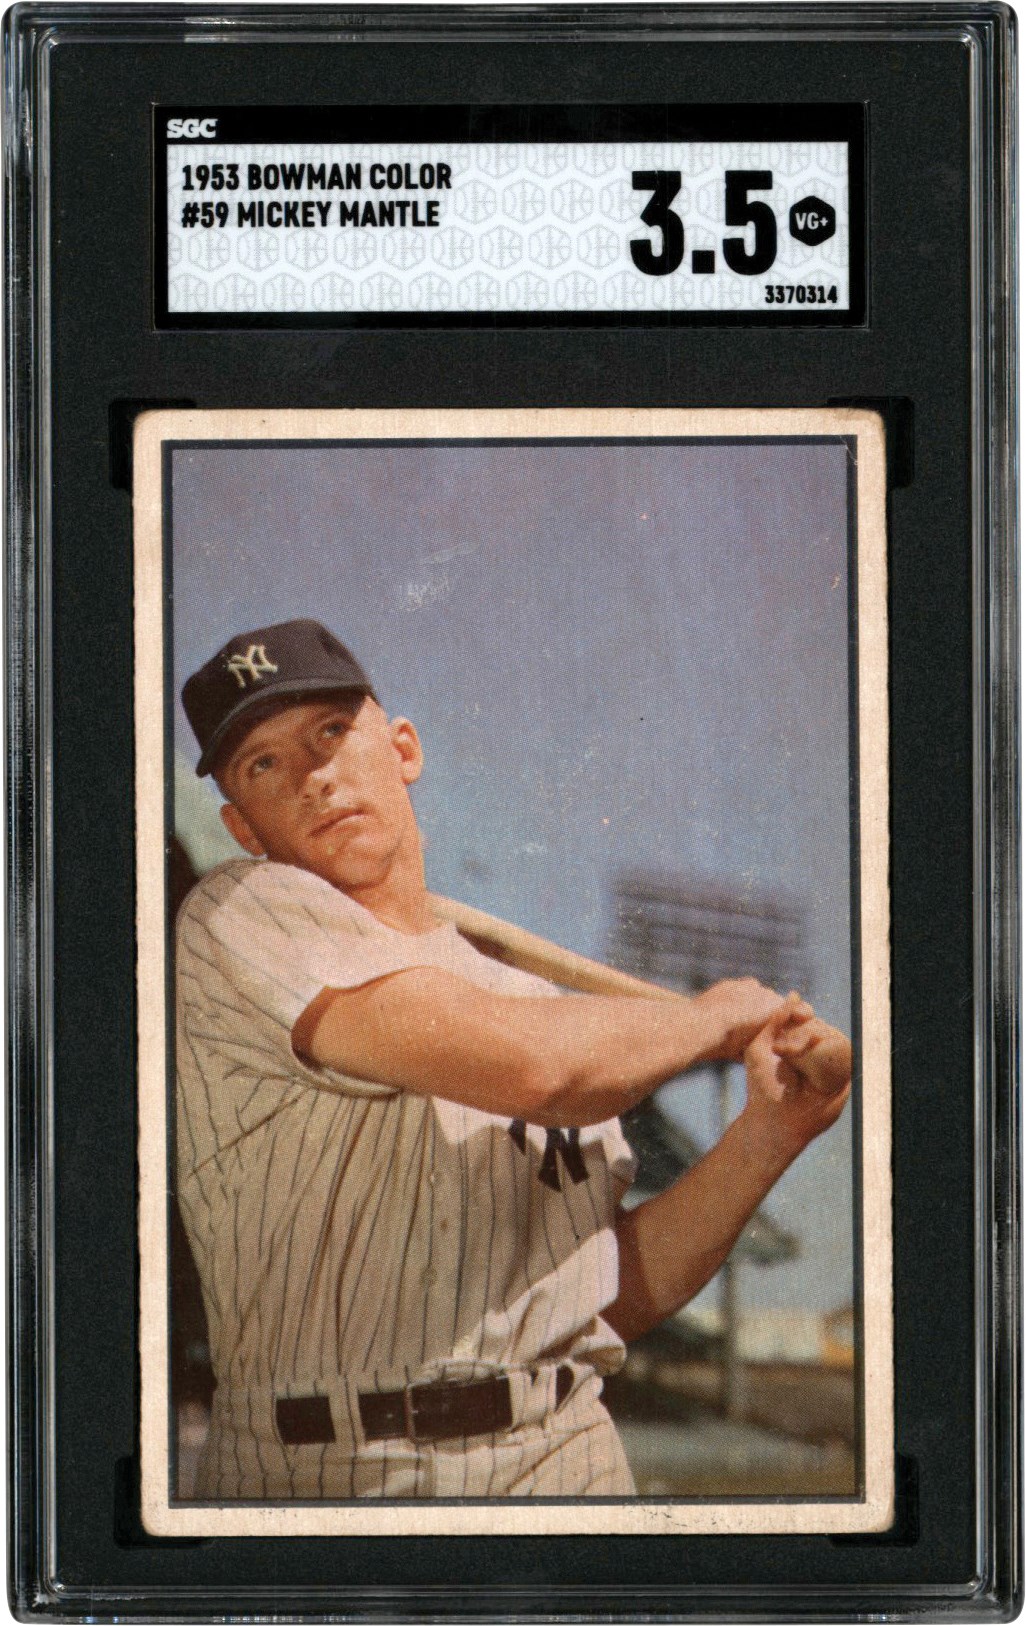 - 1953 Bowman Color Baseball #59 Mickey Mantle Card SGC VG+ 3.5